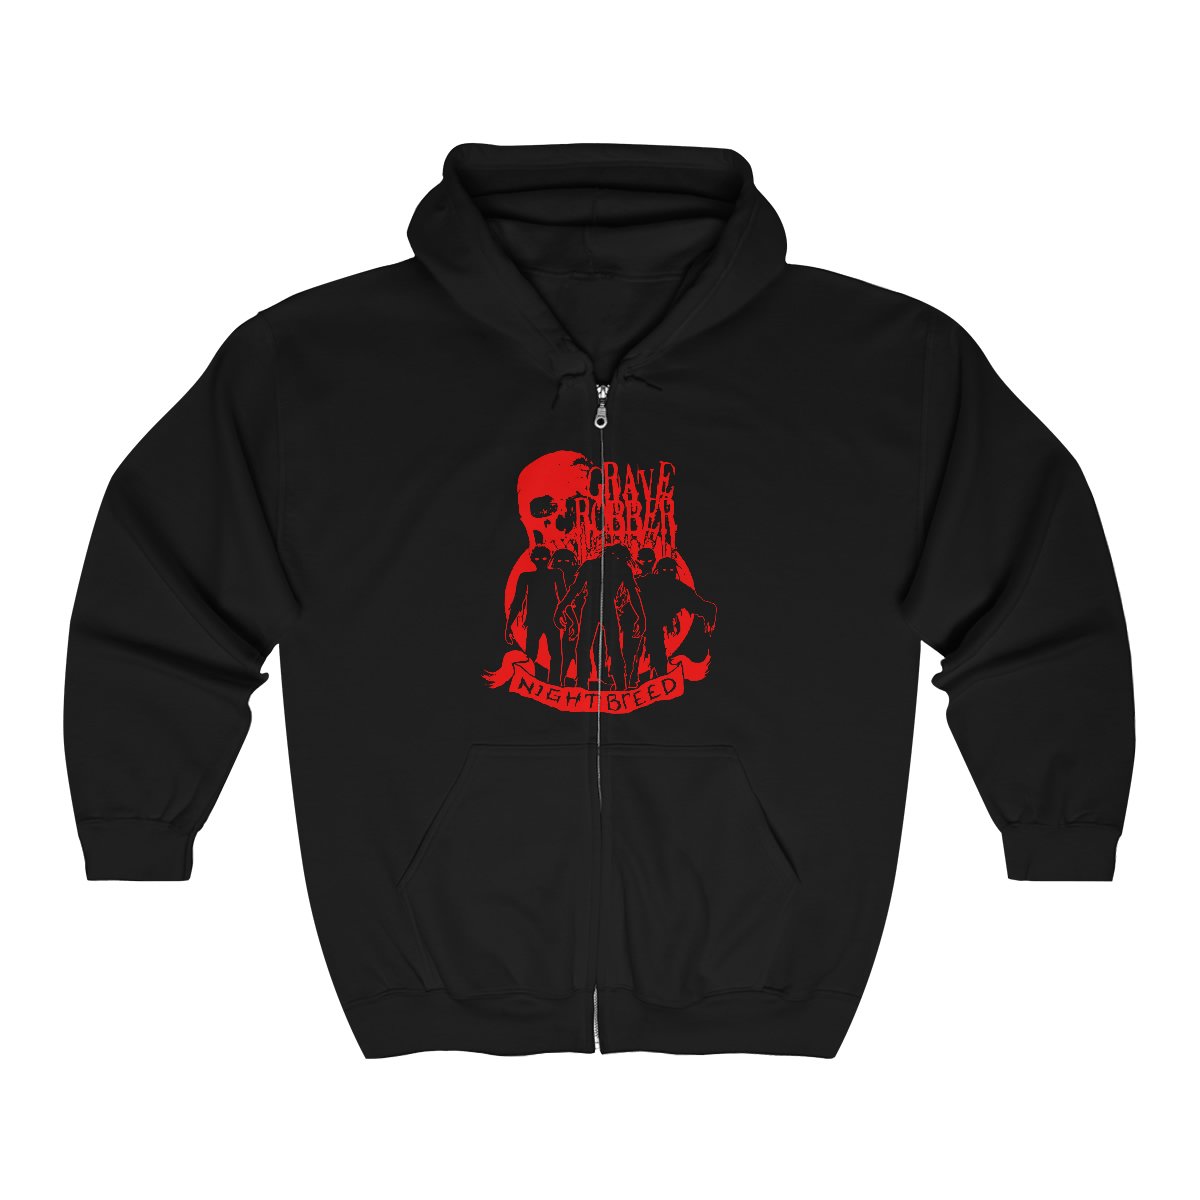 Grave Robber Night Breed (Red) Full Zip Hooded Sweatshirt